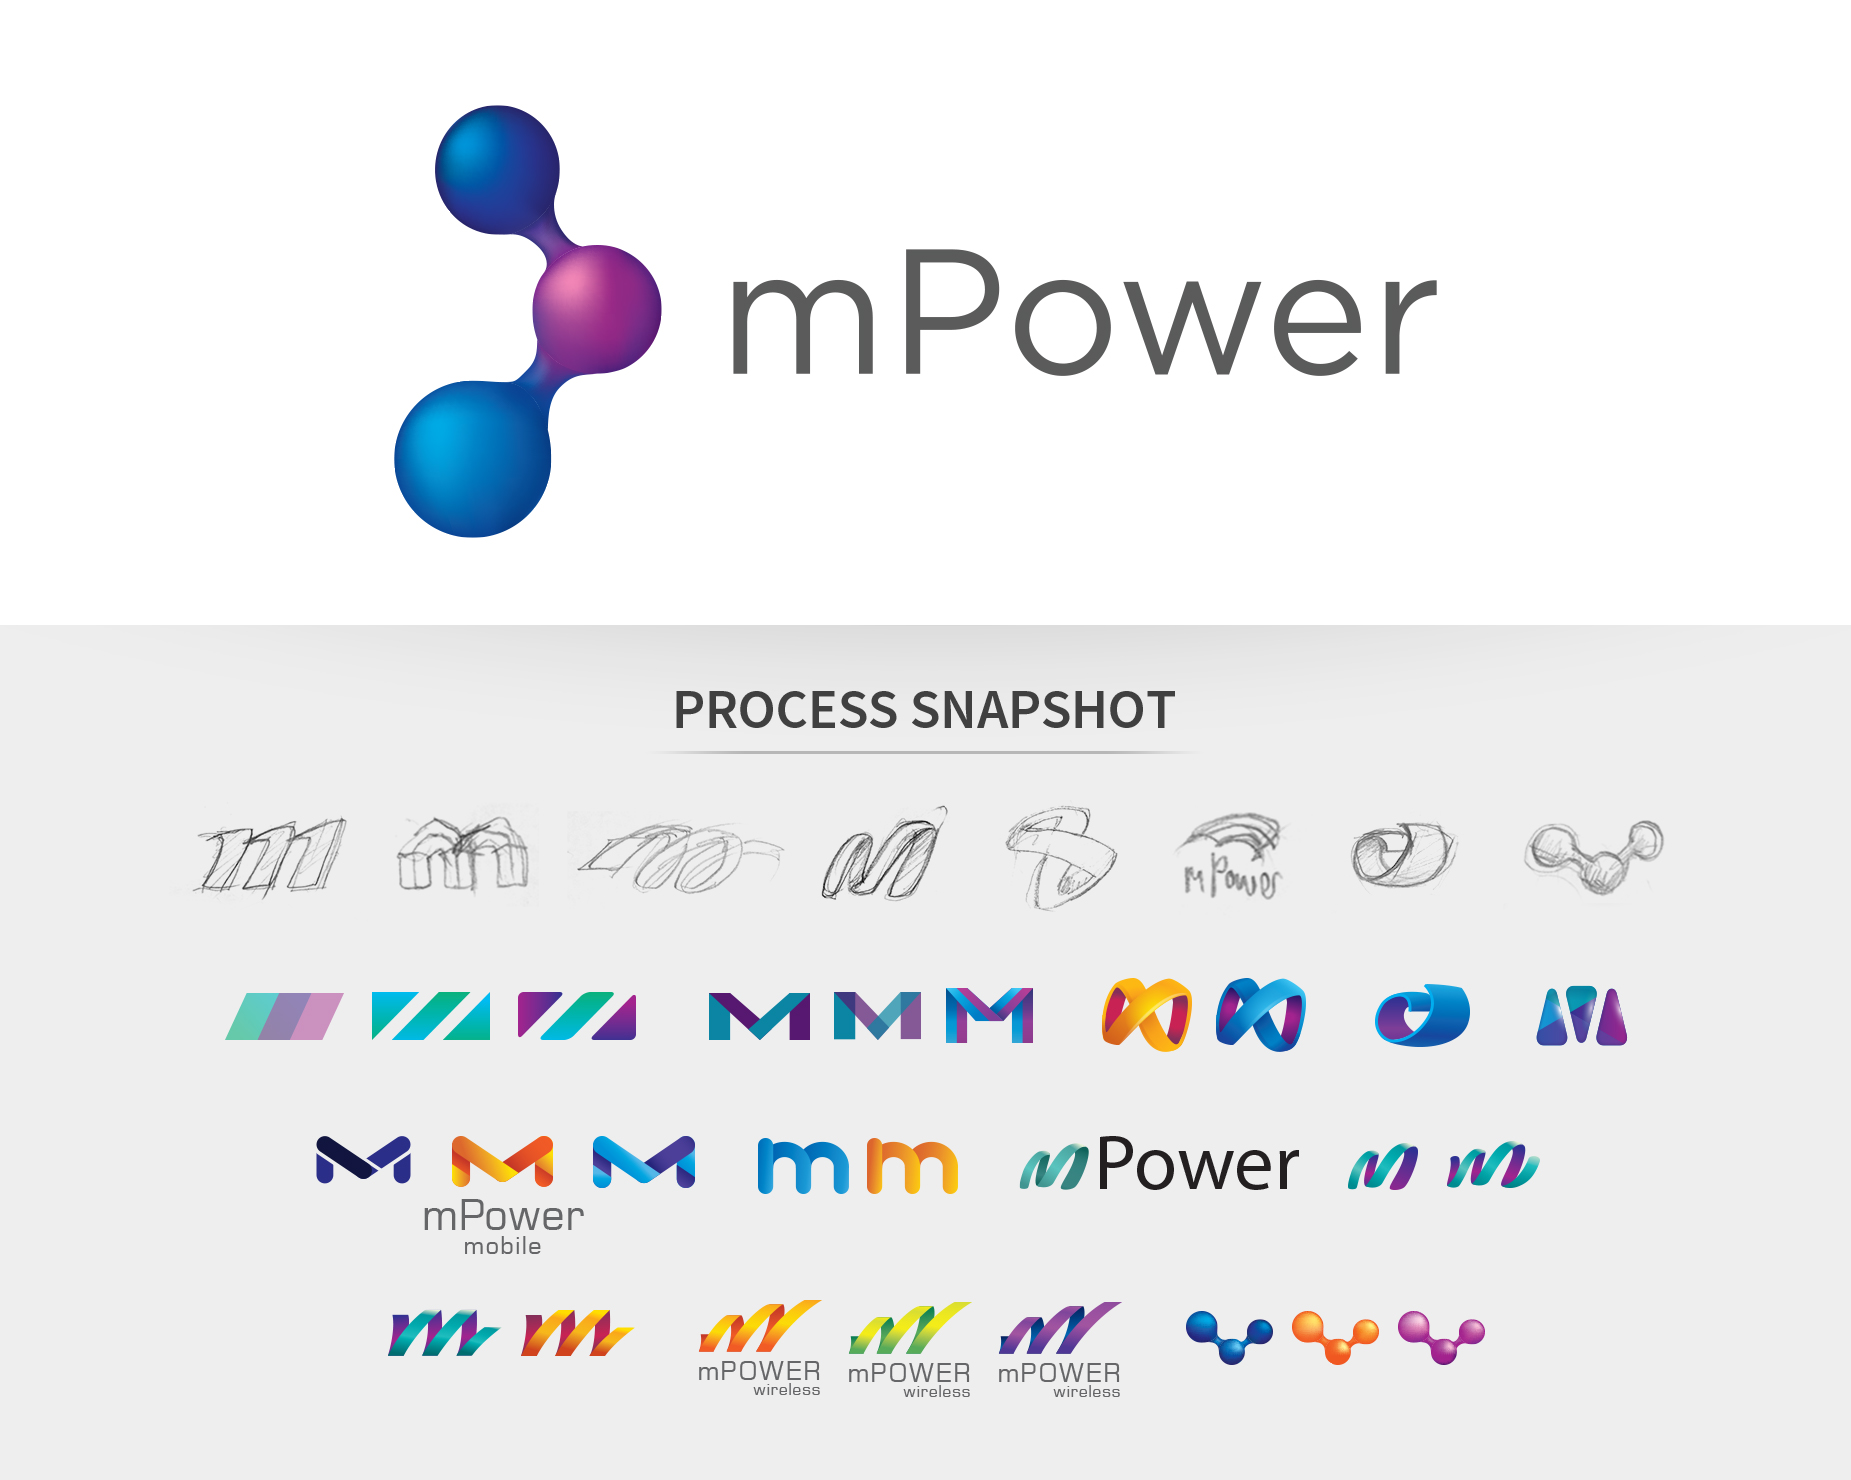 mPower logo branding and process snapshot